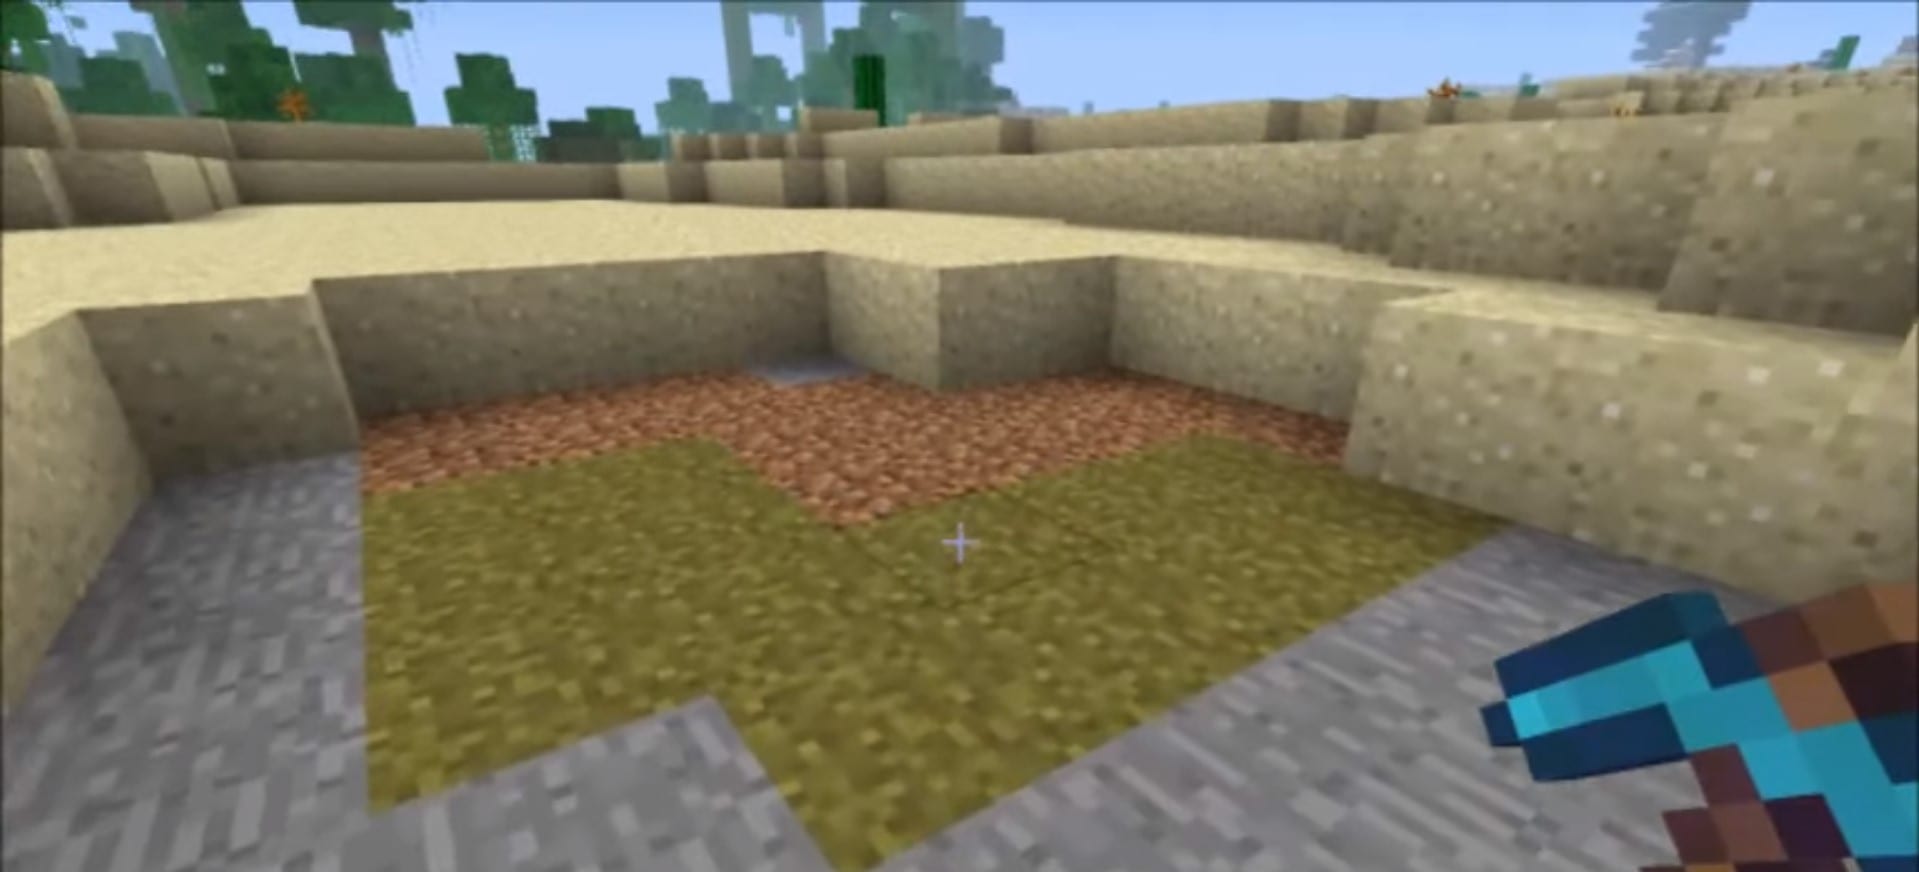 How To Grow Grass On Dirt Minecraft